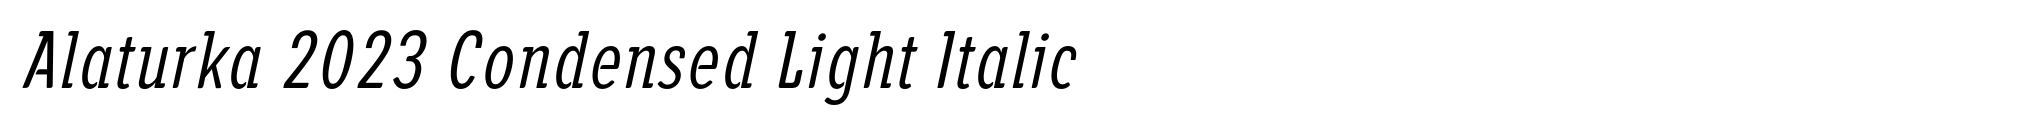 Alaturka 2023 Condensed Light Italic image